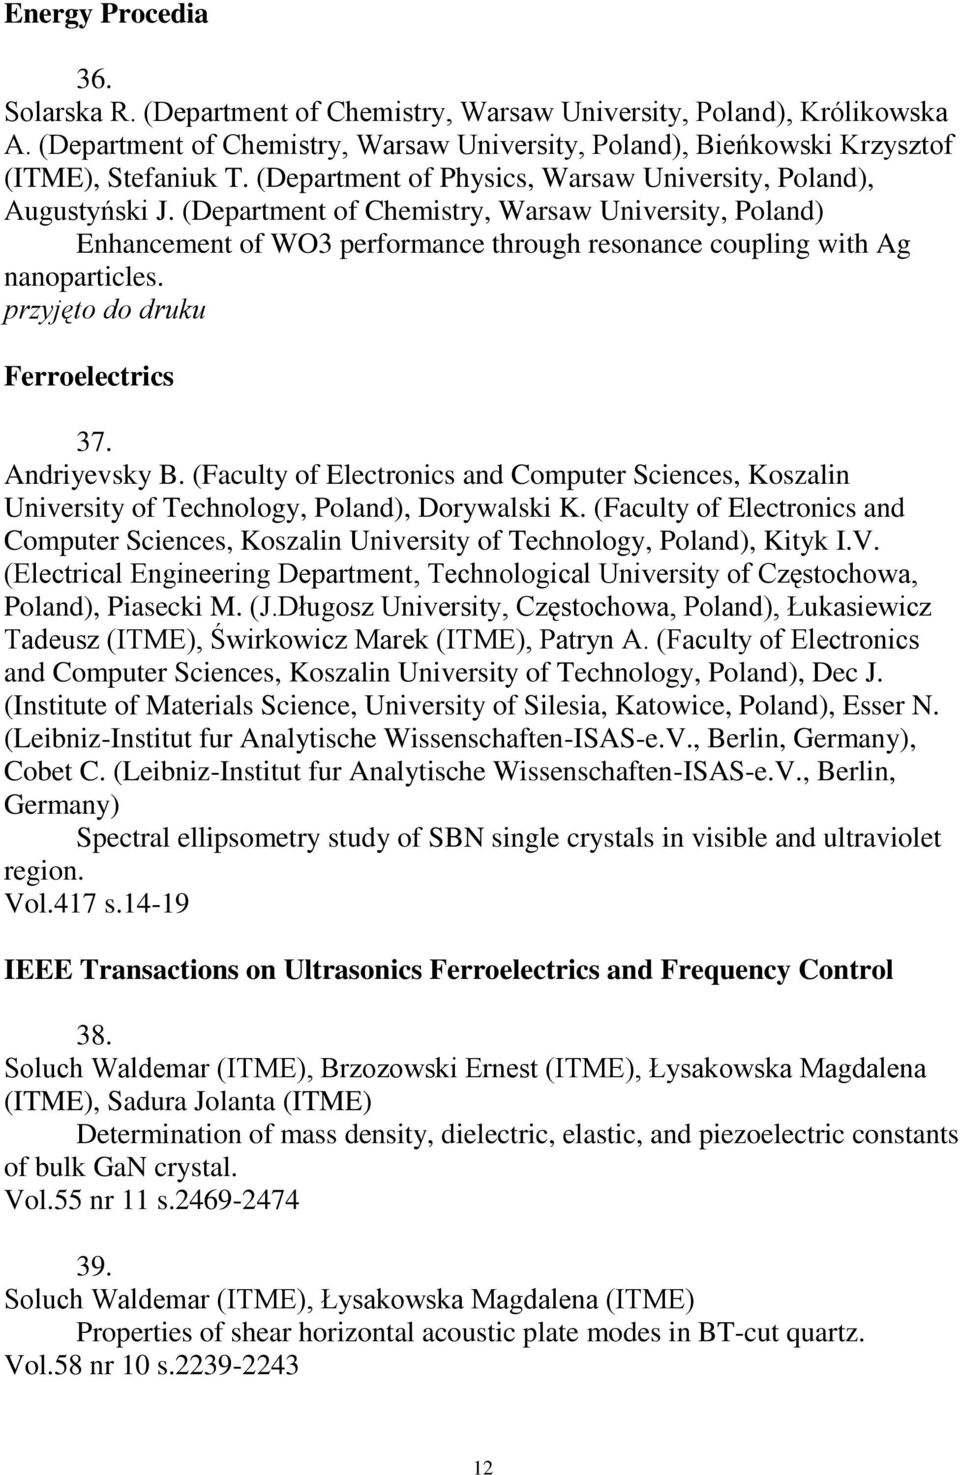 przyjęto do druku Ferroelectrics 37. Andriyevsky B. (Faculty of Electronics and Computer Sciences, Koszalin University of Technology, Poland), Dorywalski K.